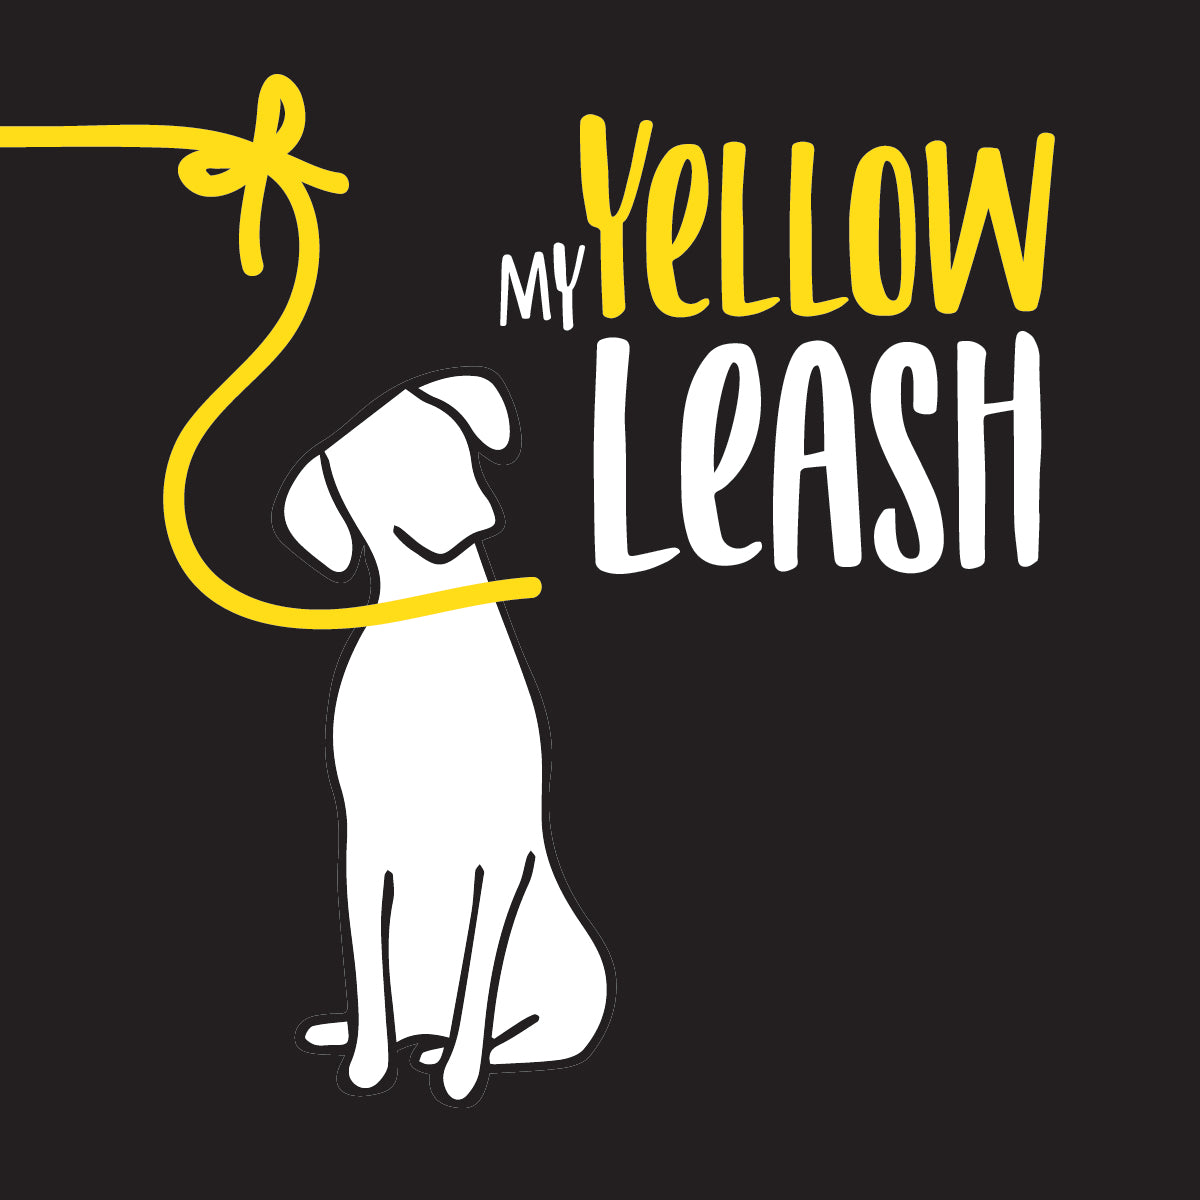 The Yellow Ribbon Leash